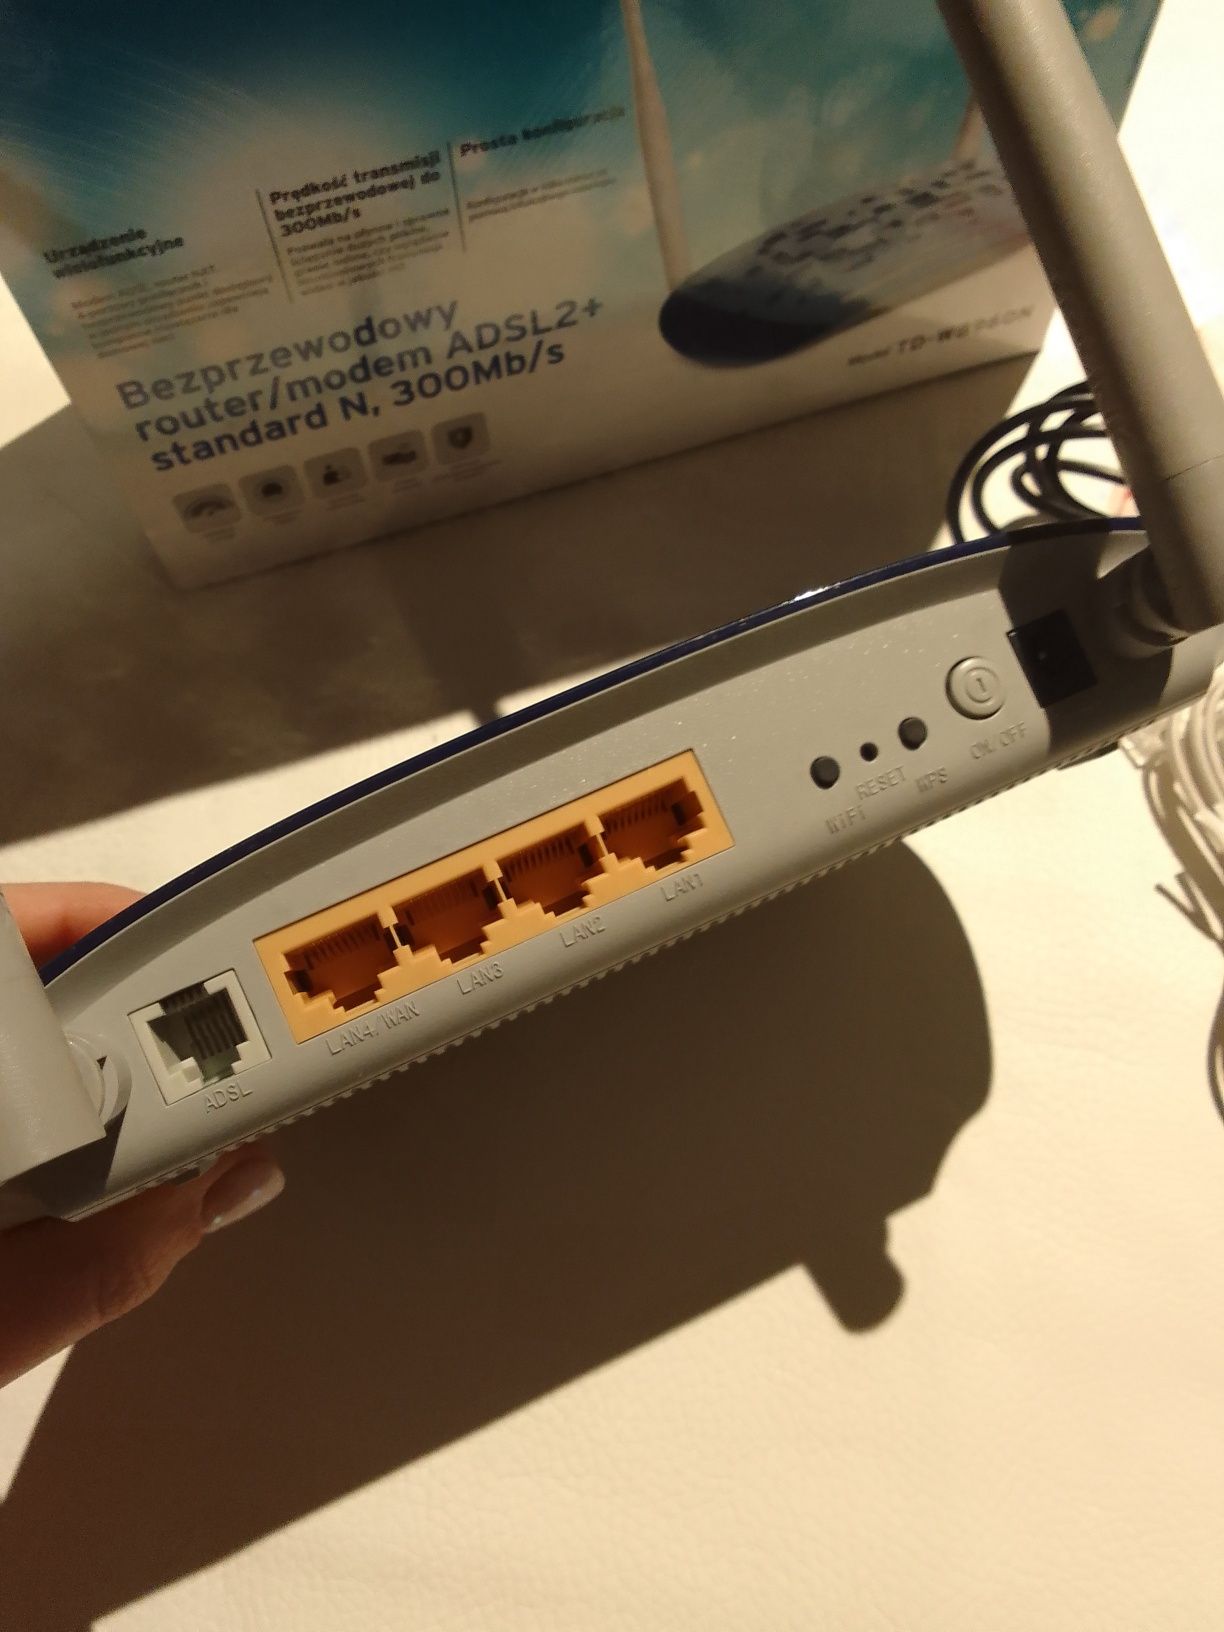 Bezprzewodowy router modem ADSL2+ standard N 300 Mb/s TP-Link